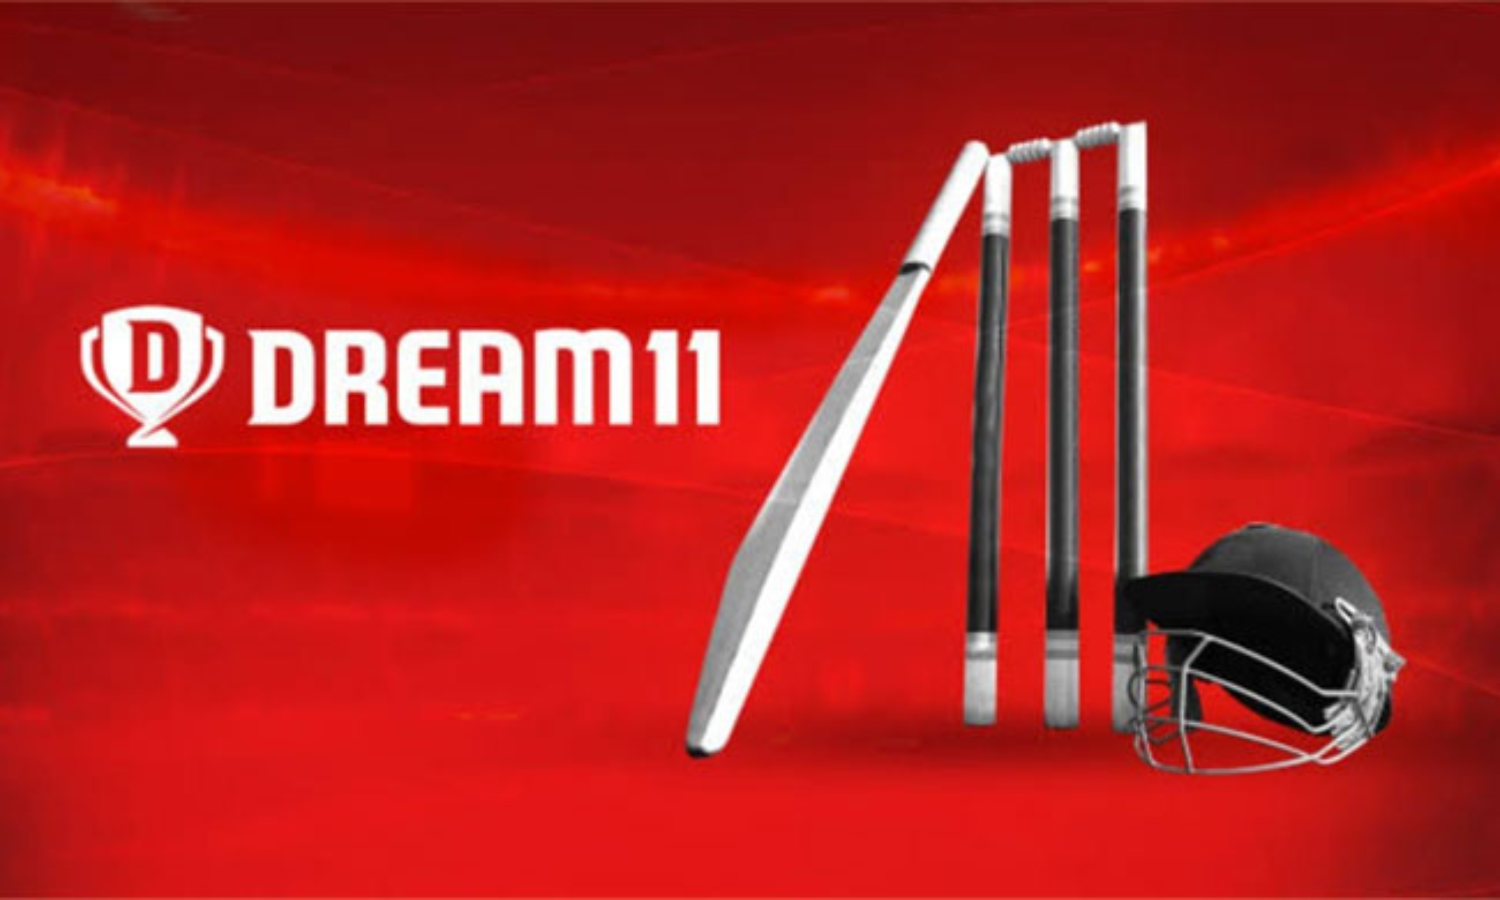 Dream 11 Fantasy Sports Game Is Not Gambling Supreme Court Upholds Rajasthan HC Judgment Dismissing PIL Seeking Its Ban